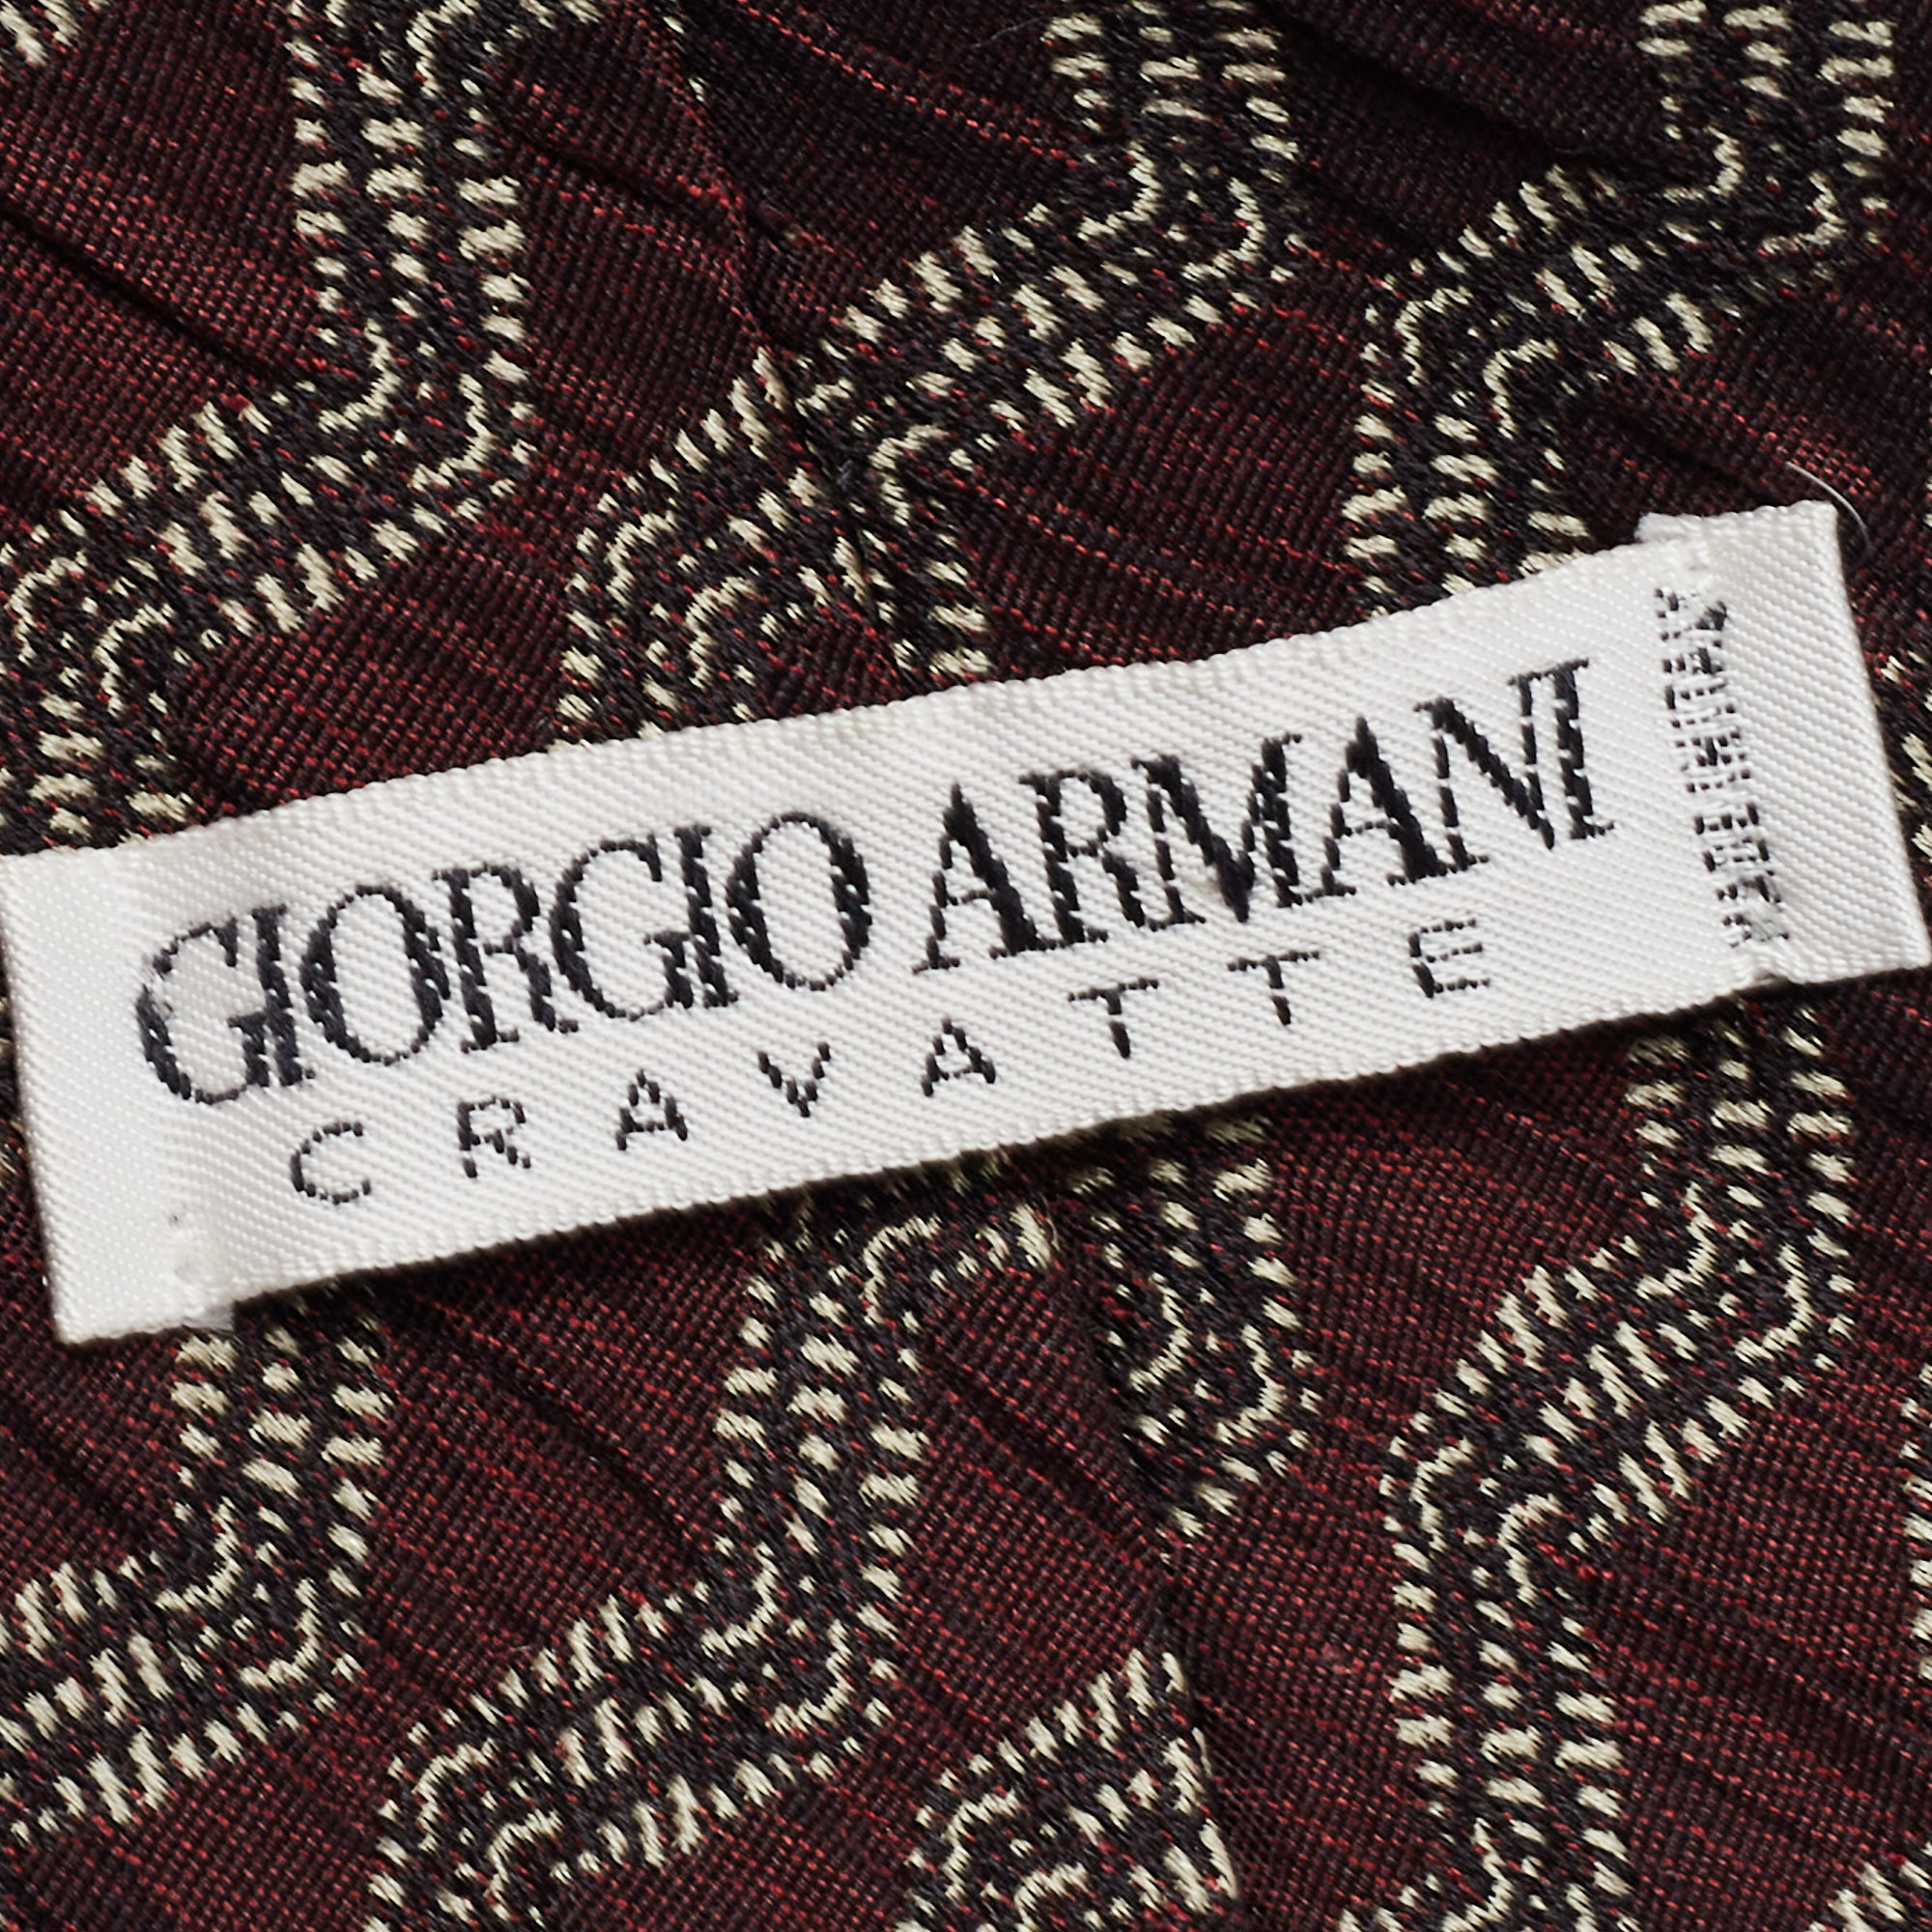 Giorgio Armani Cravatte Burgundy Printed Textured Silk Tie